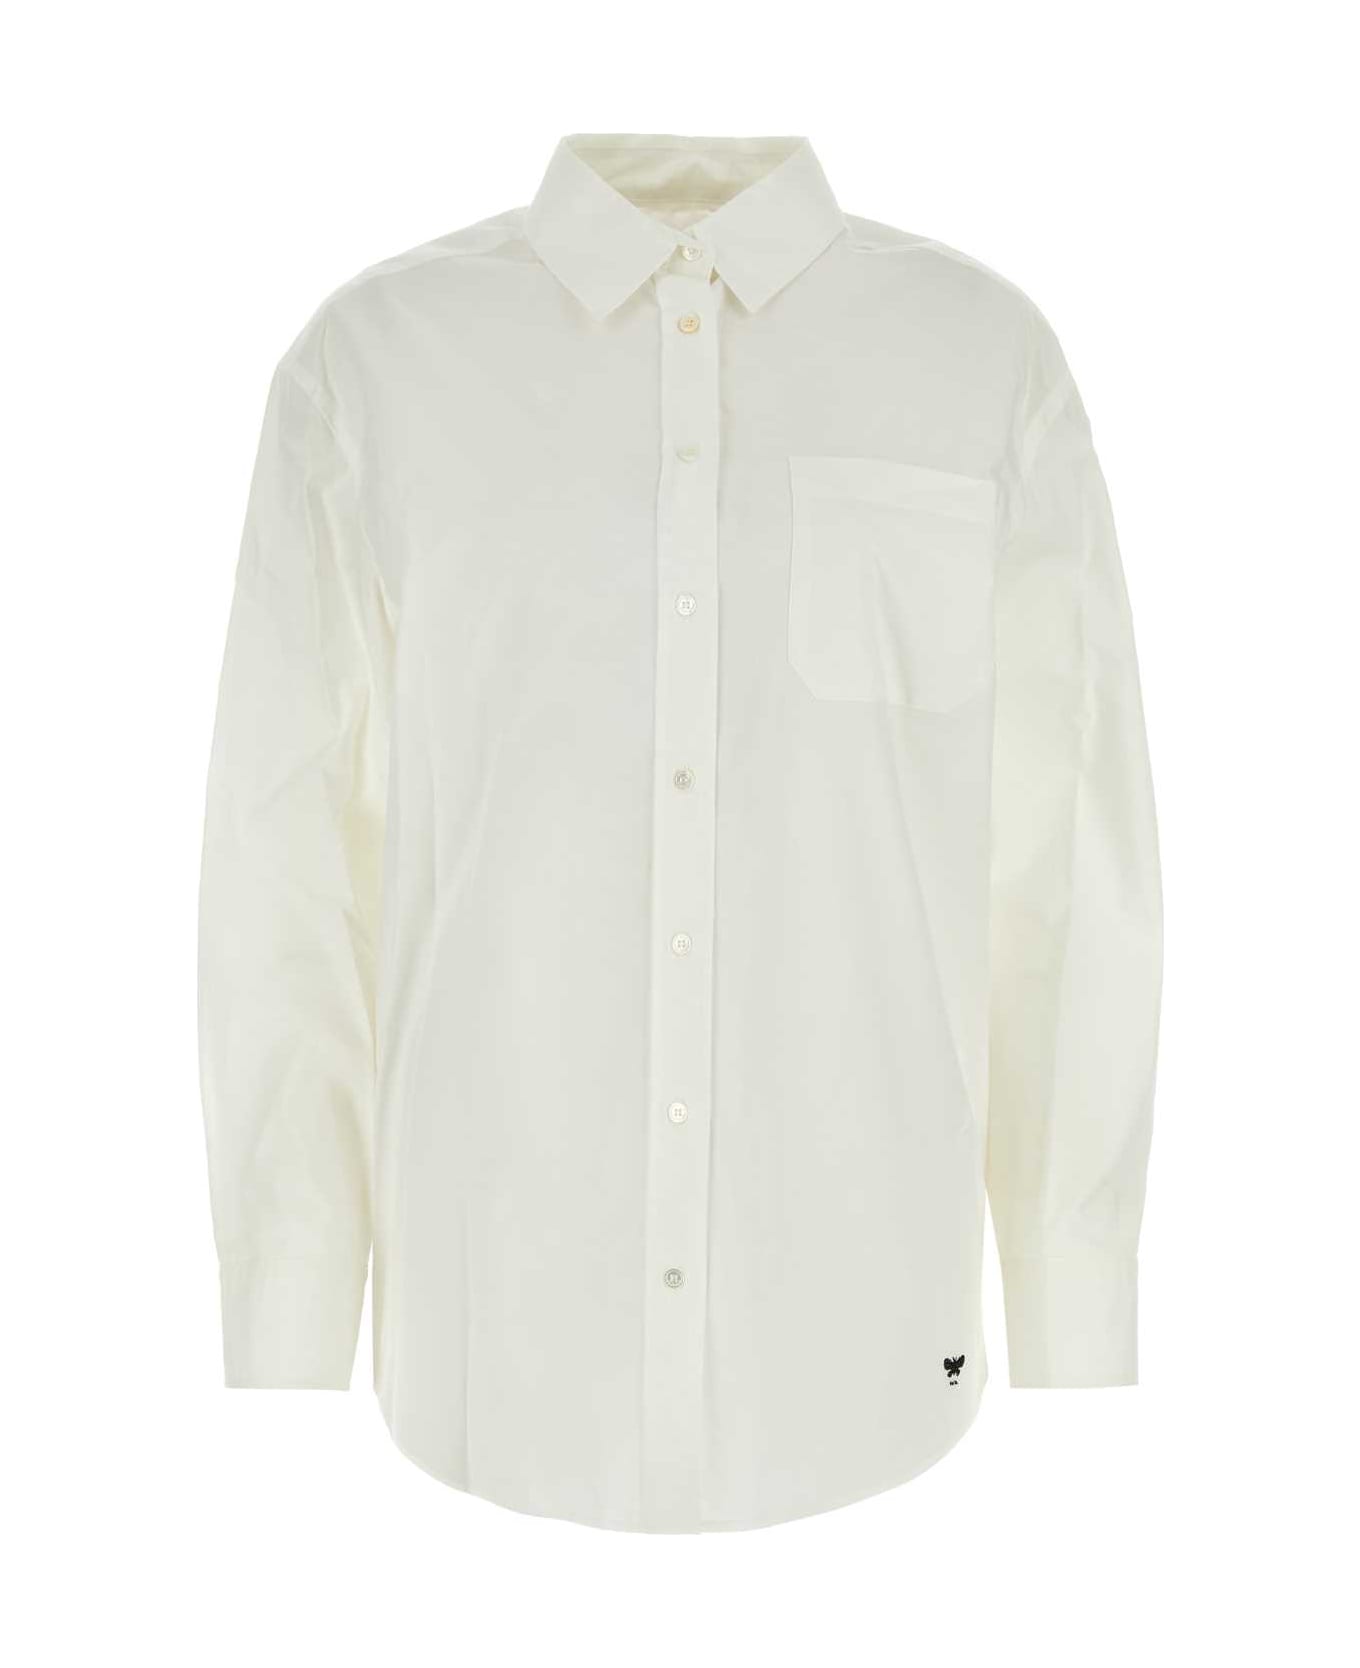 Weekend Max Mara White Cotton Shirt - 001